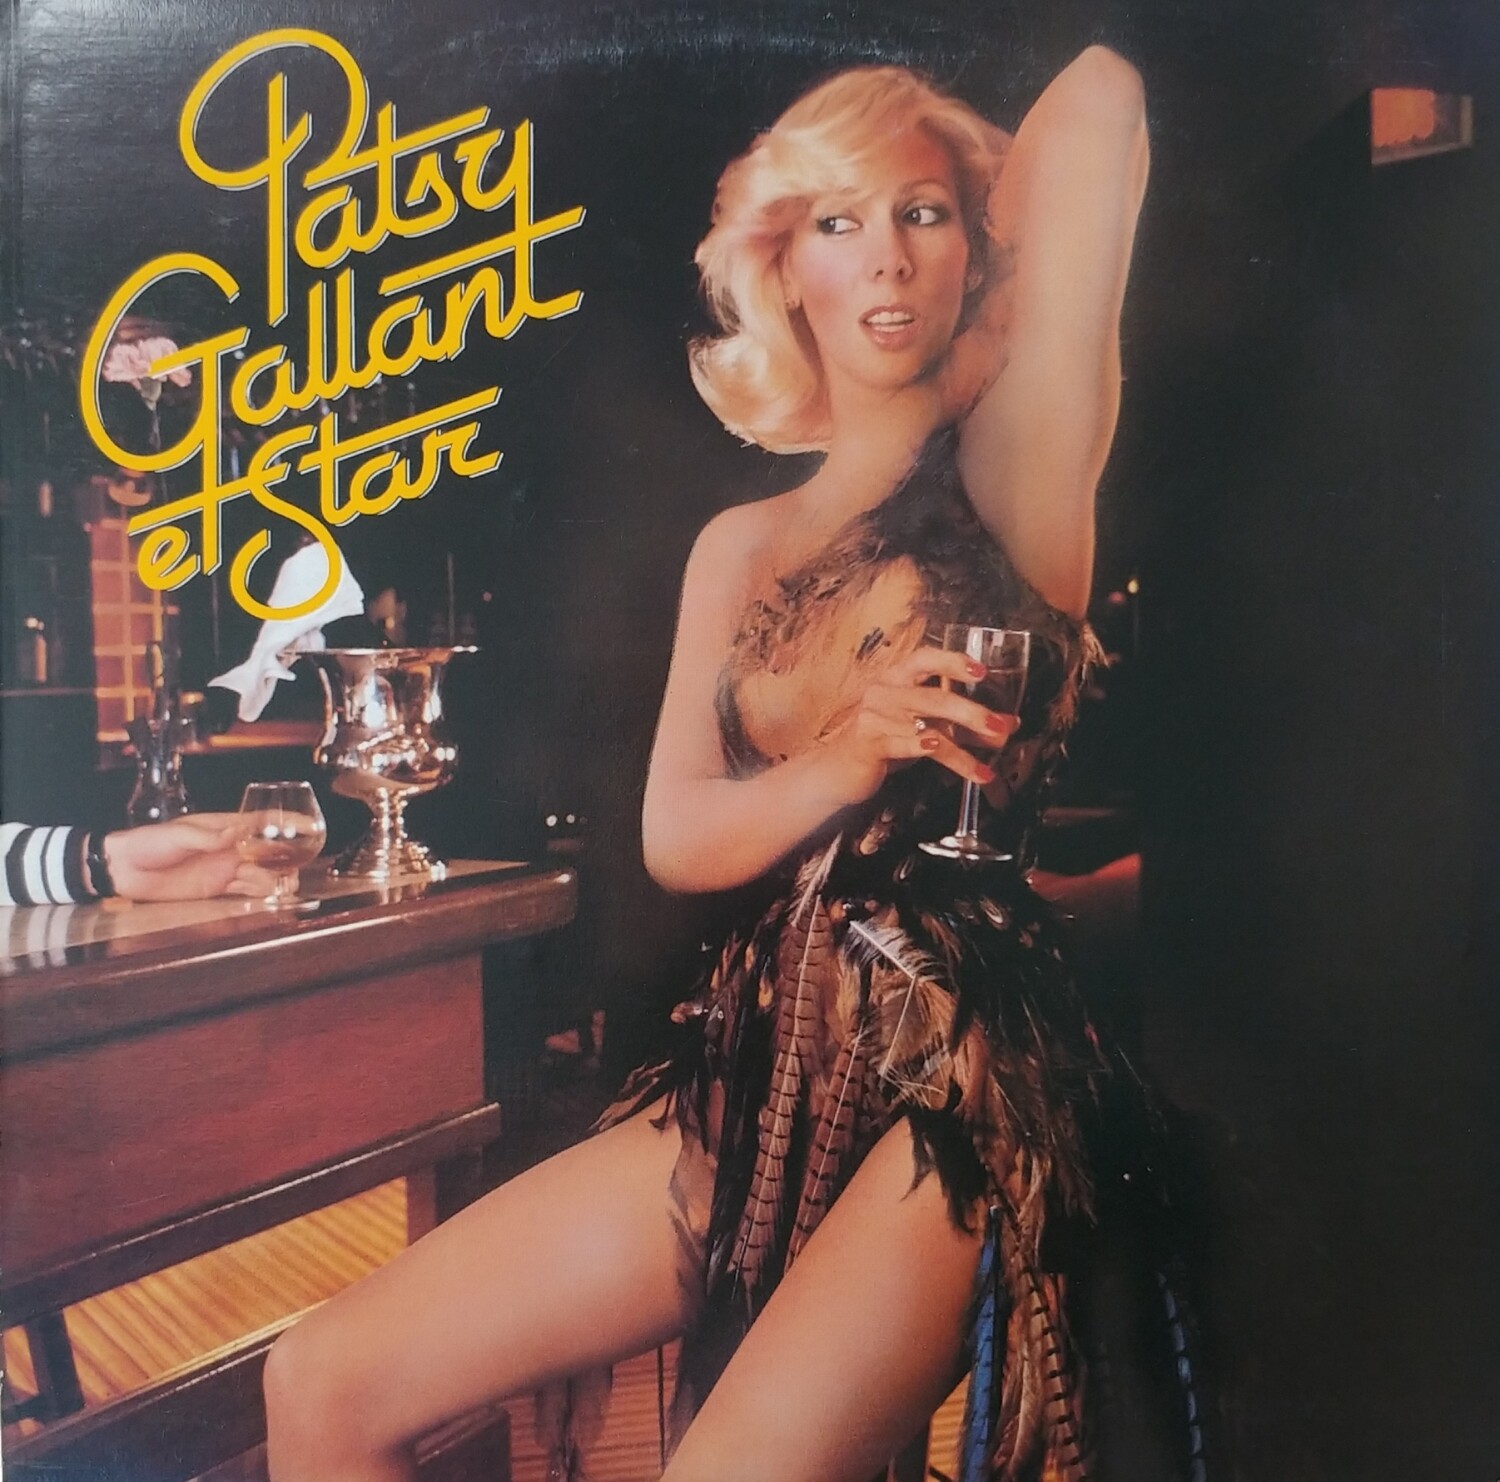 Patsy Gallant - Patsy Gallant et Star